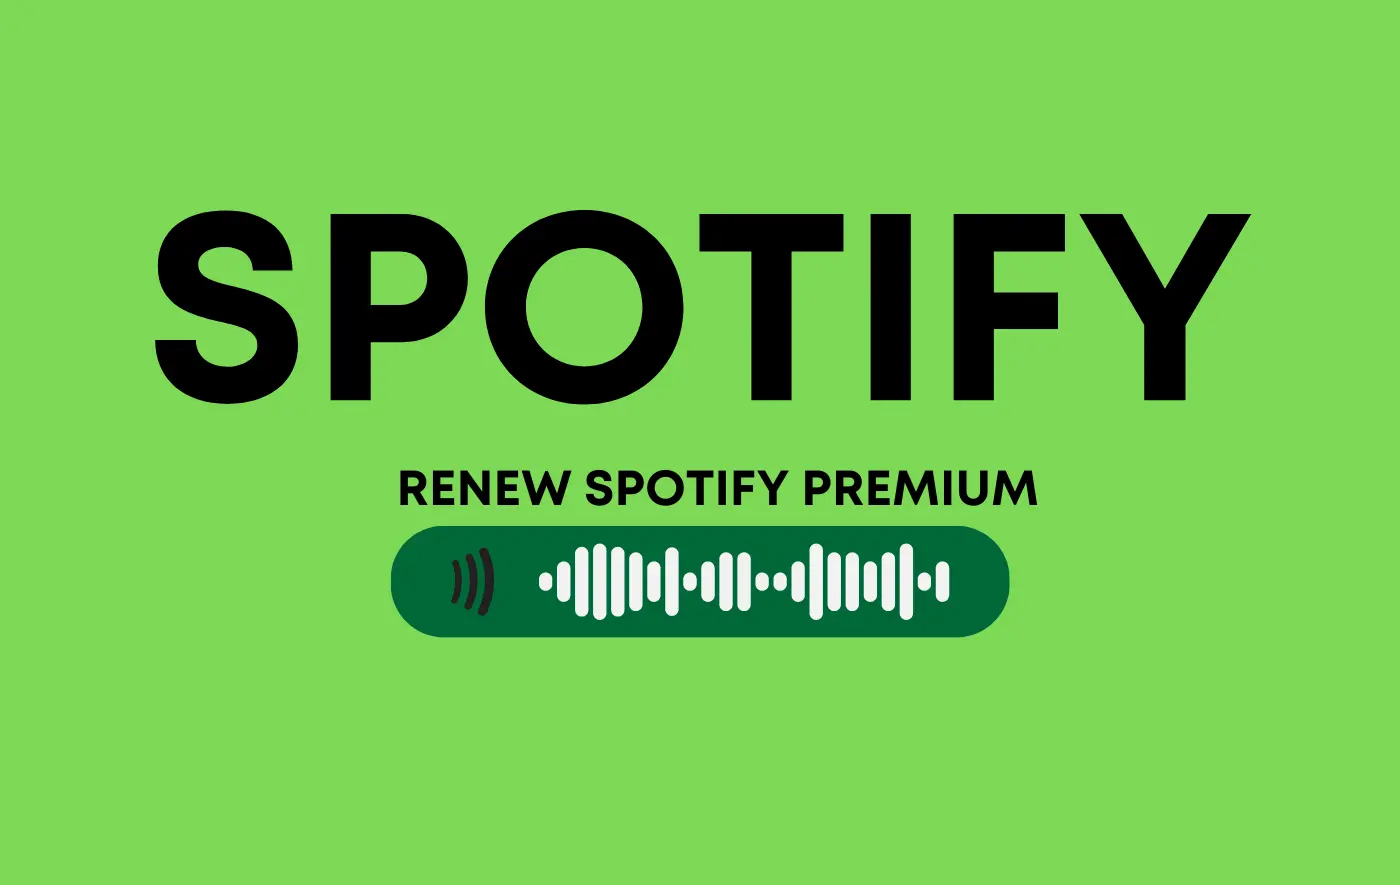 How to Renew Spotify Premium